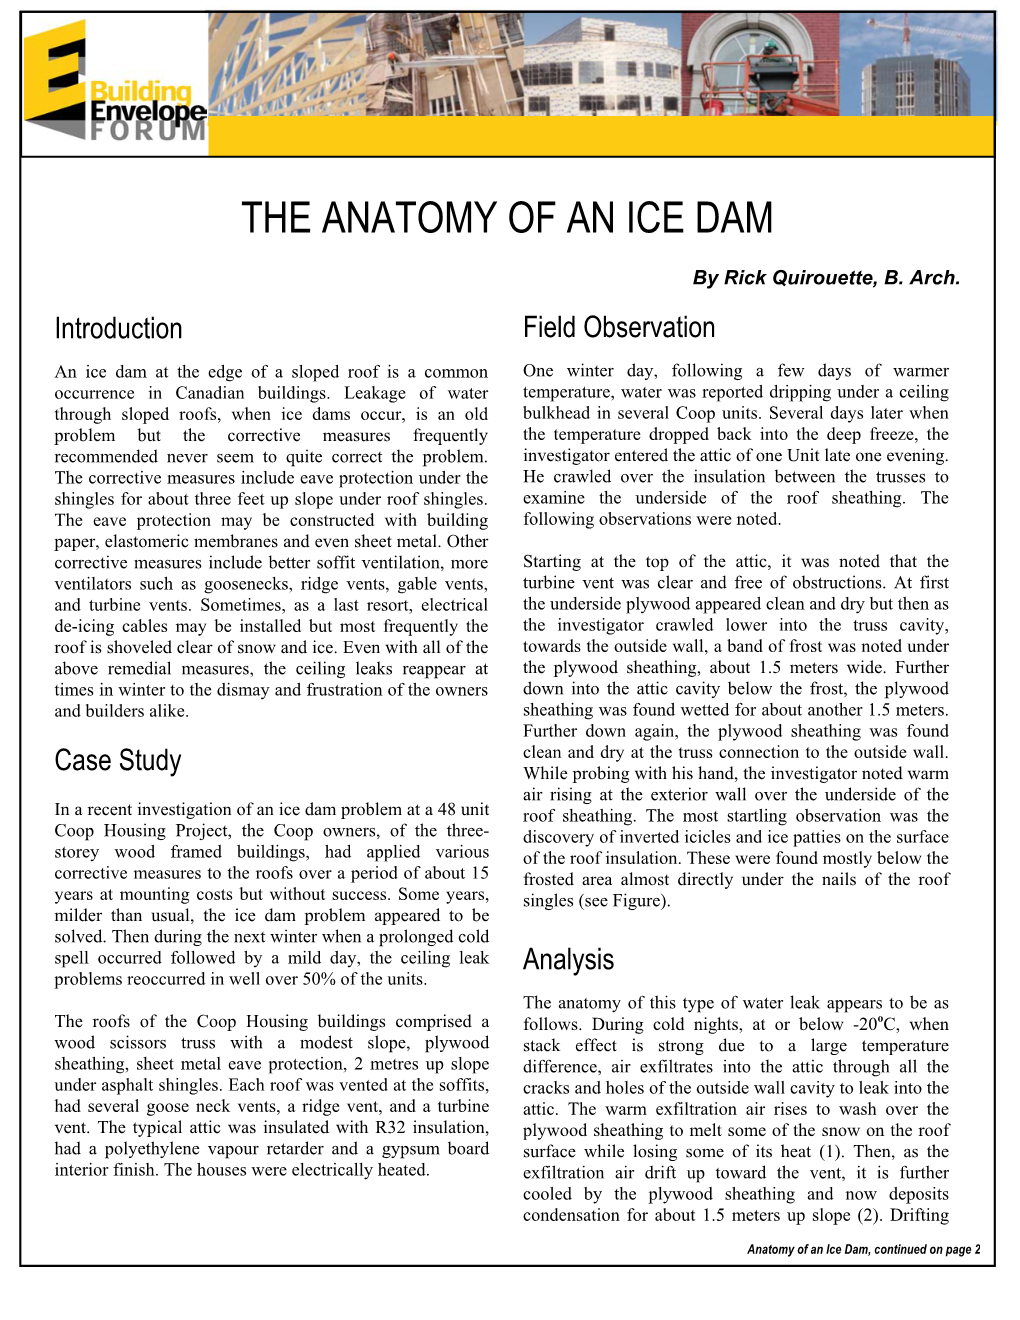 The Anatomy of an Ice Dam